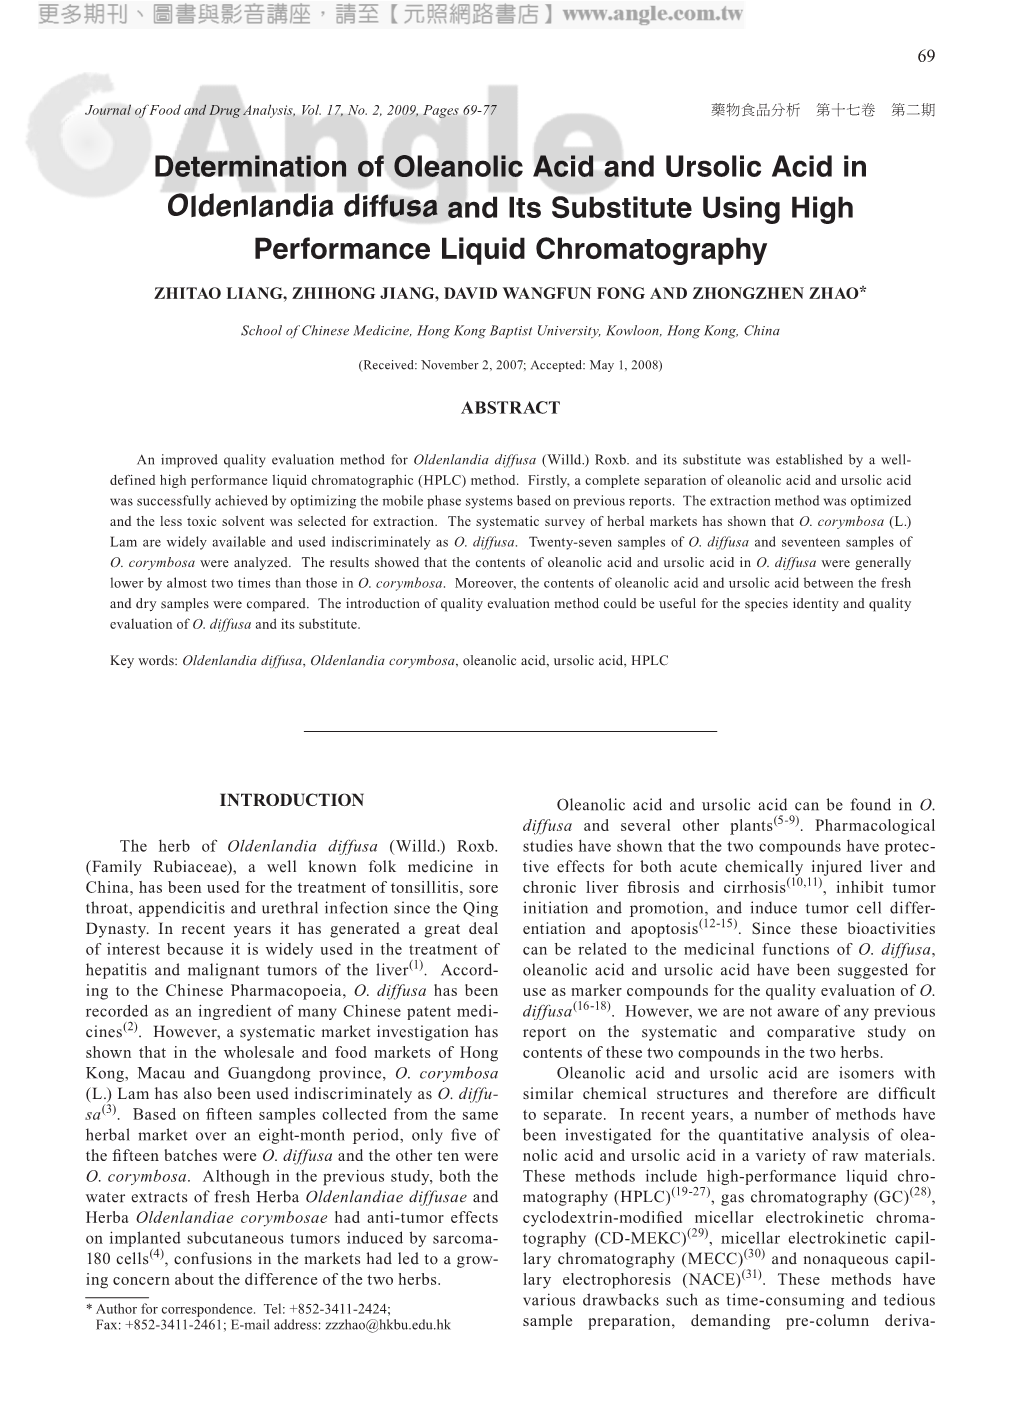 Determination of Oleanolic Acid and Ursolic Acid in Oldenlandia Diffusa and Its Substitute Using High Performance Liquid Chromatography